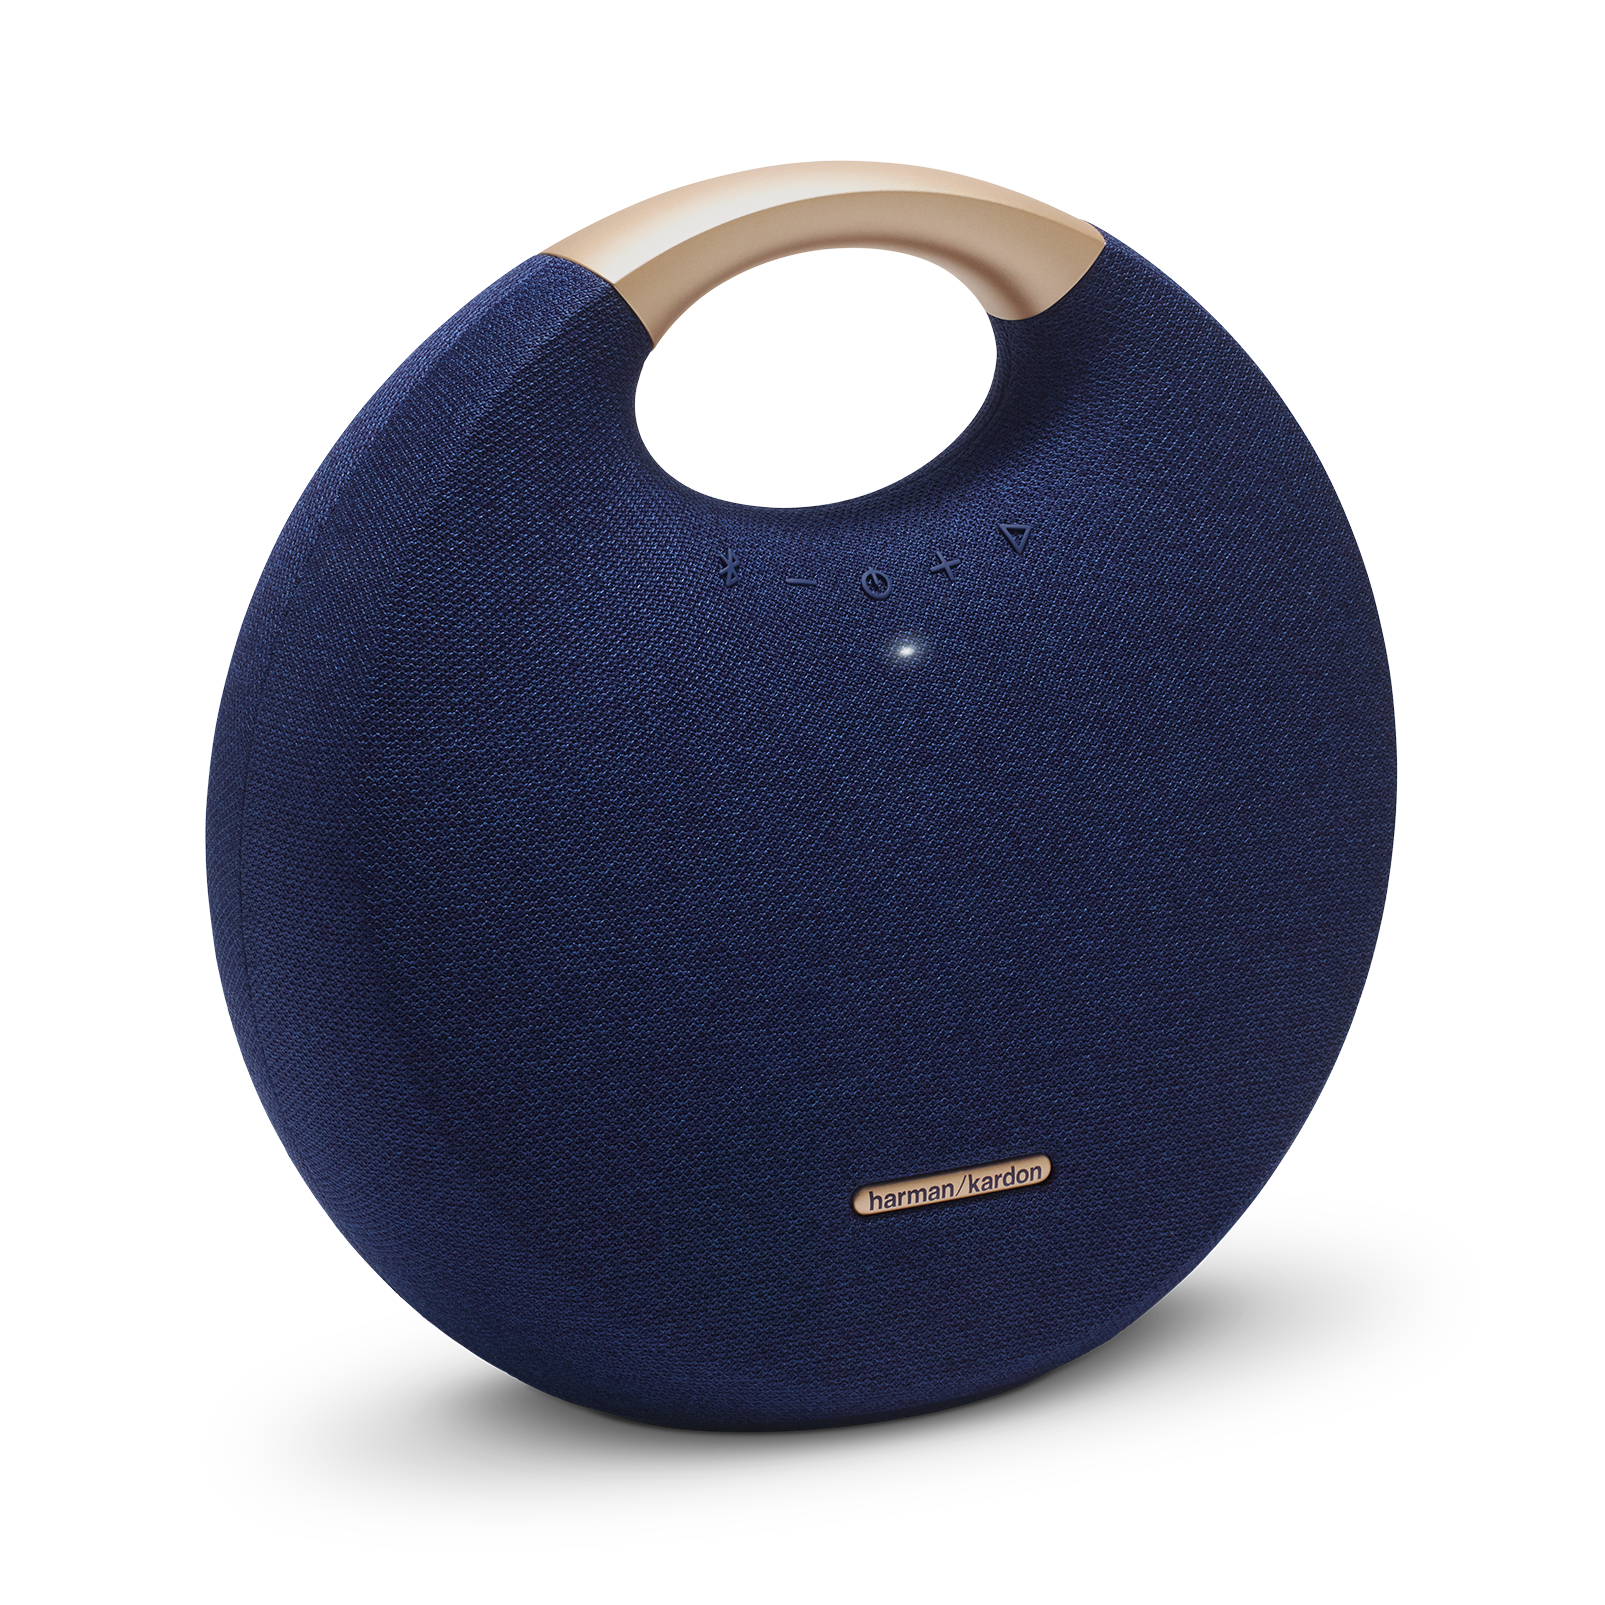 Onyx Studio 5 - Blue - Portable Bluetooth Speaker - Hero